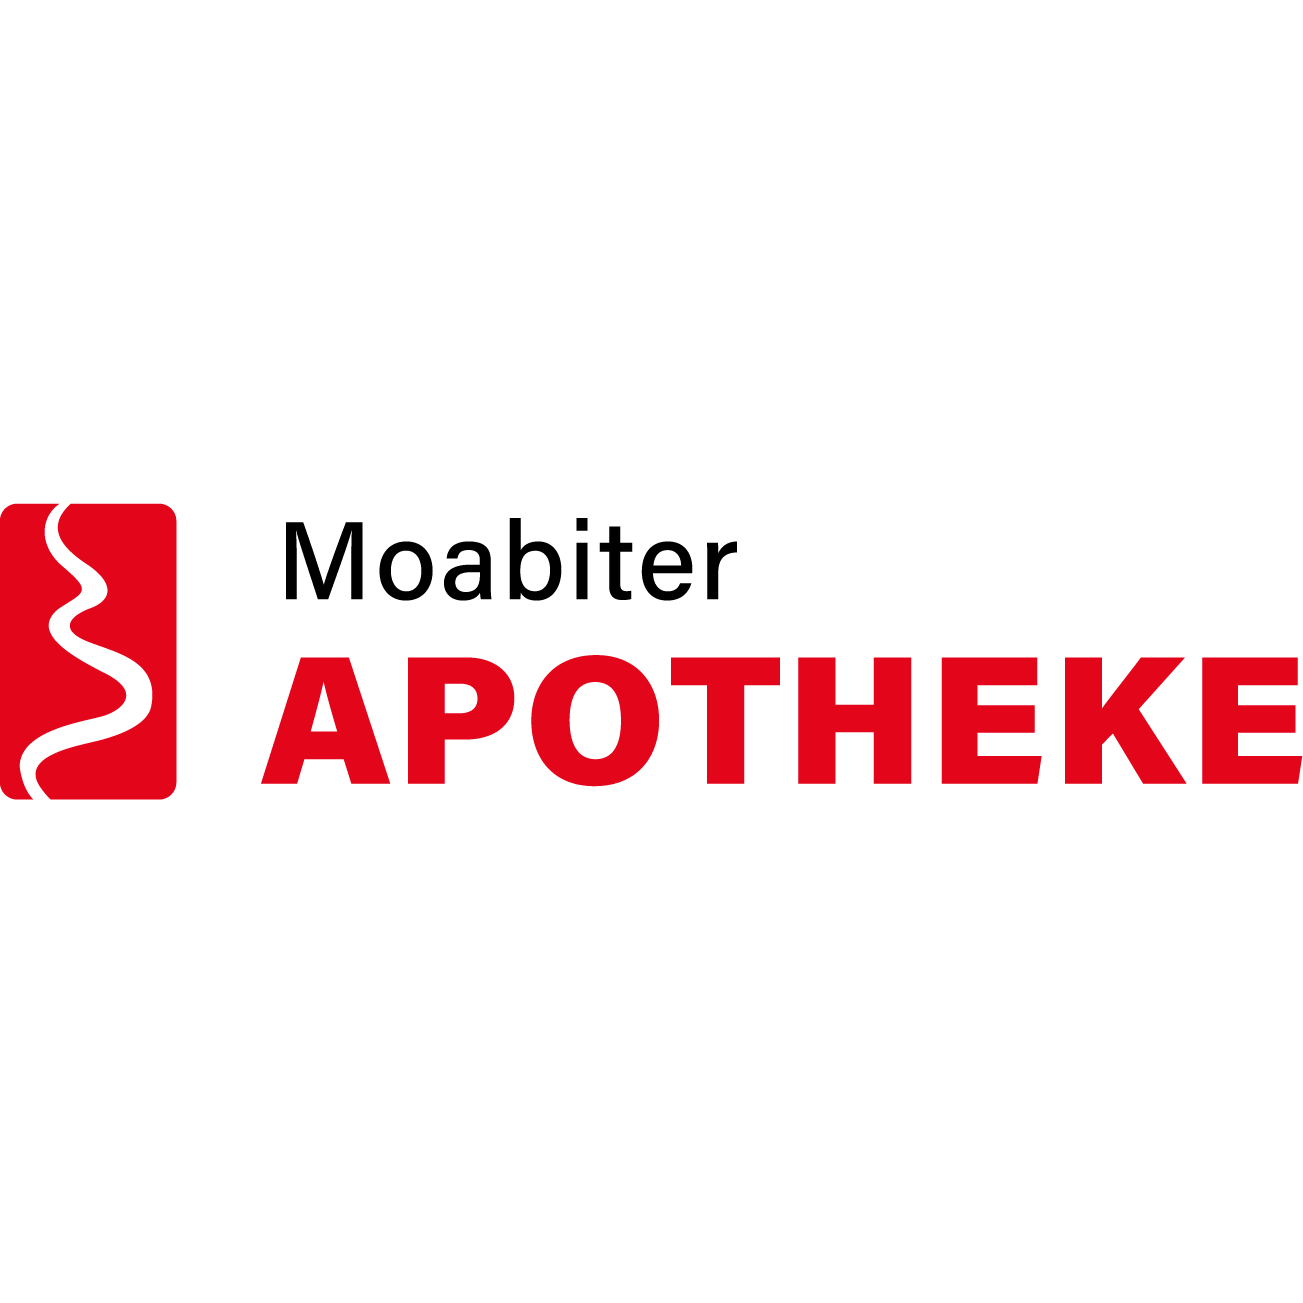 Moabiter Apotheke  